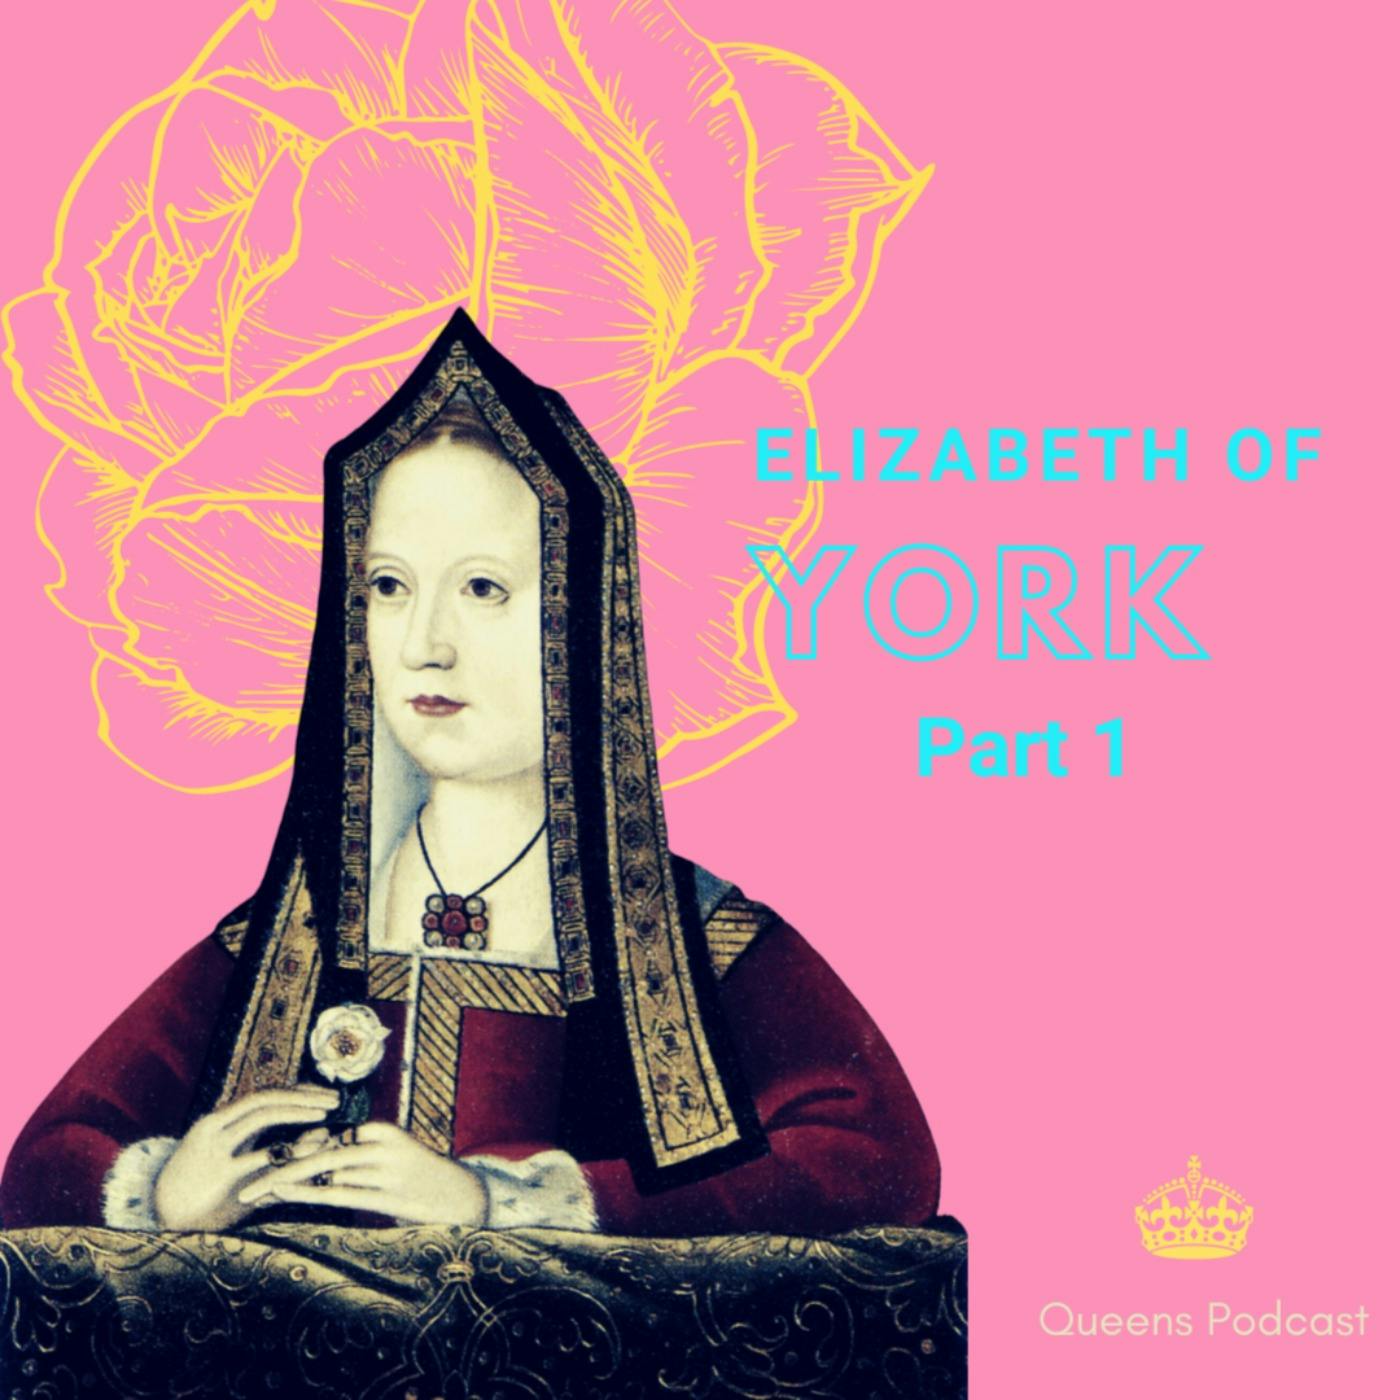 Elizabeth of York, Part 1